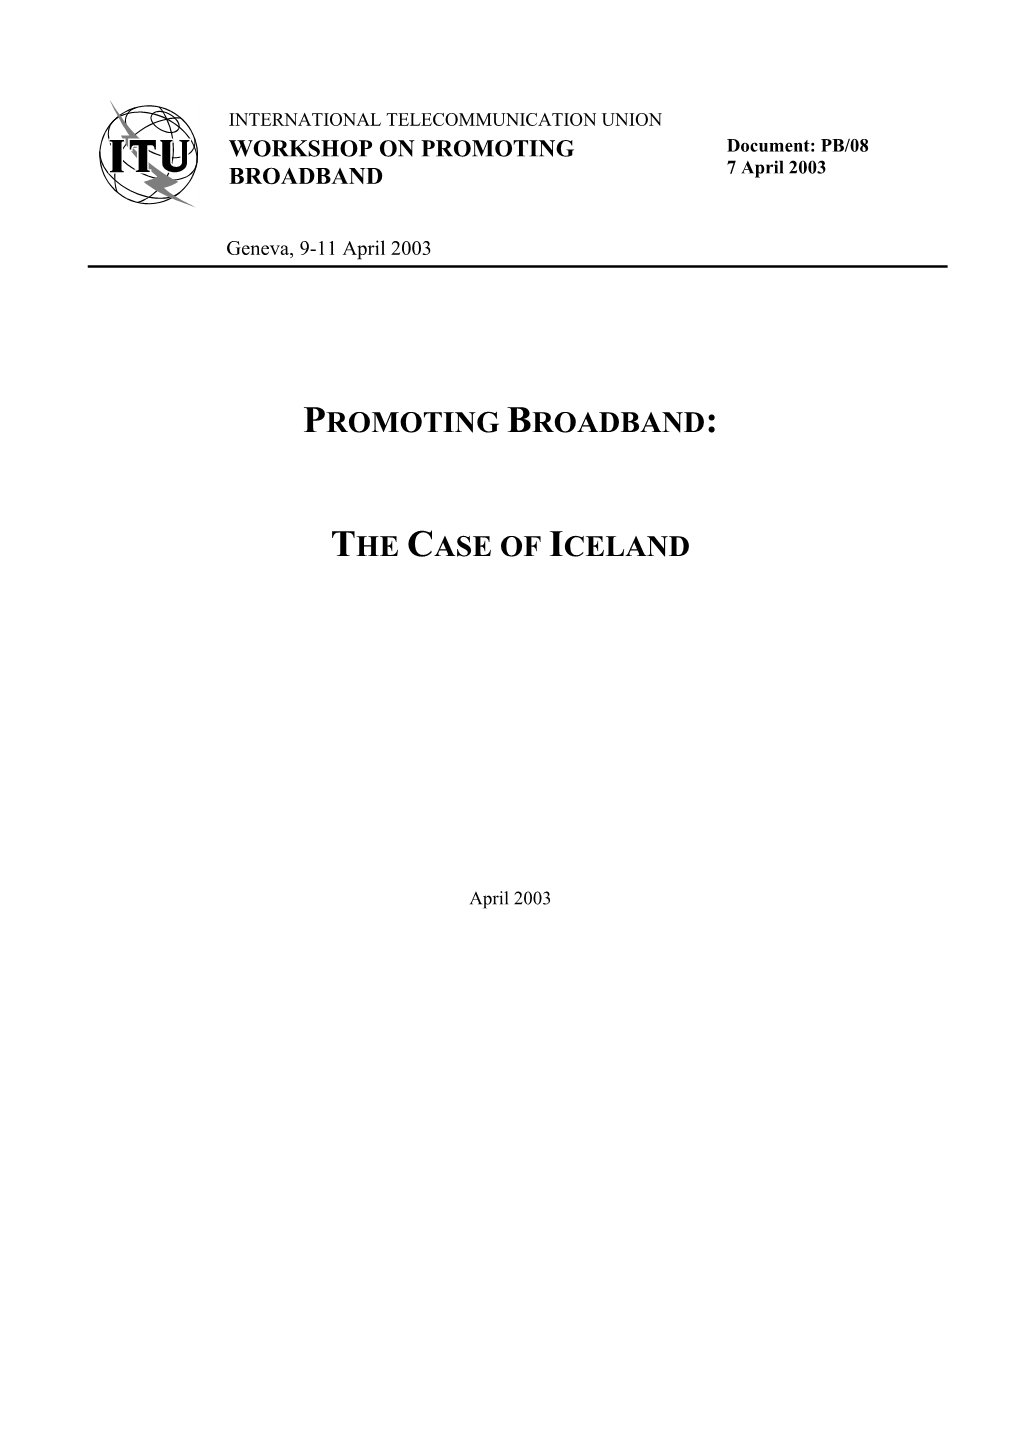 Iceland Case Study on "Promoting Broadband"